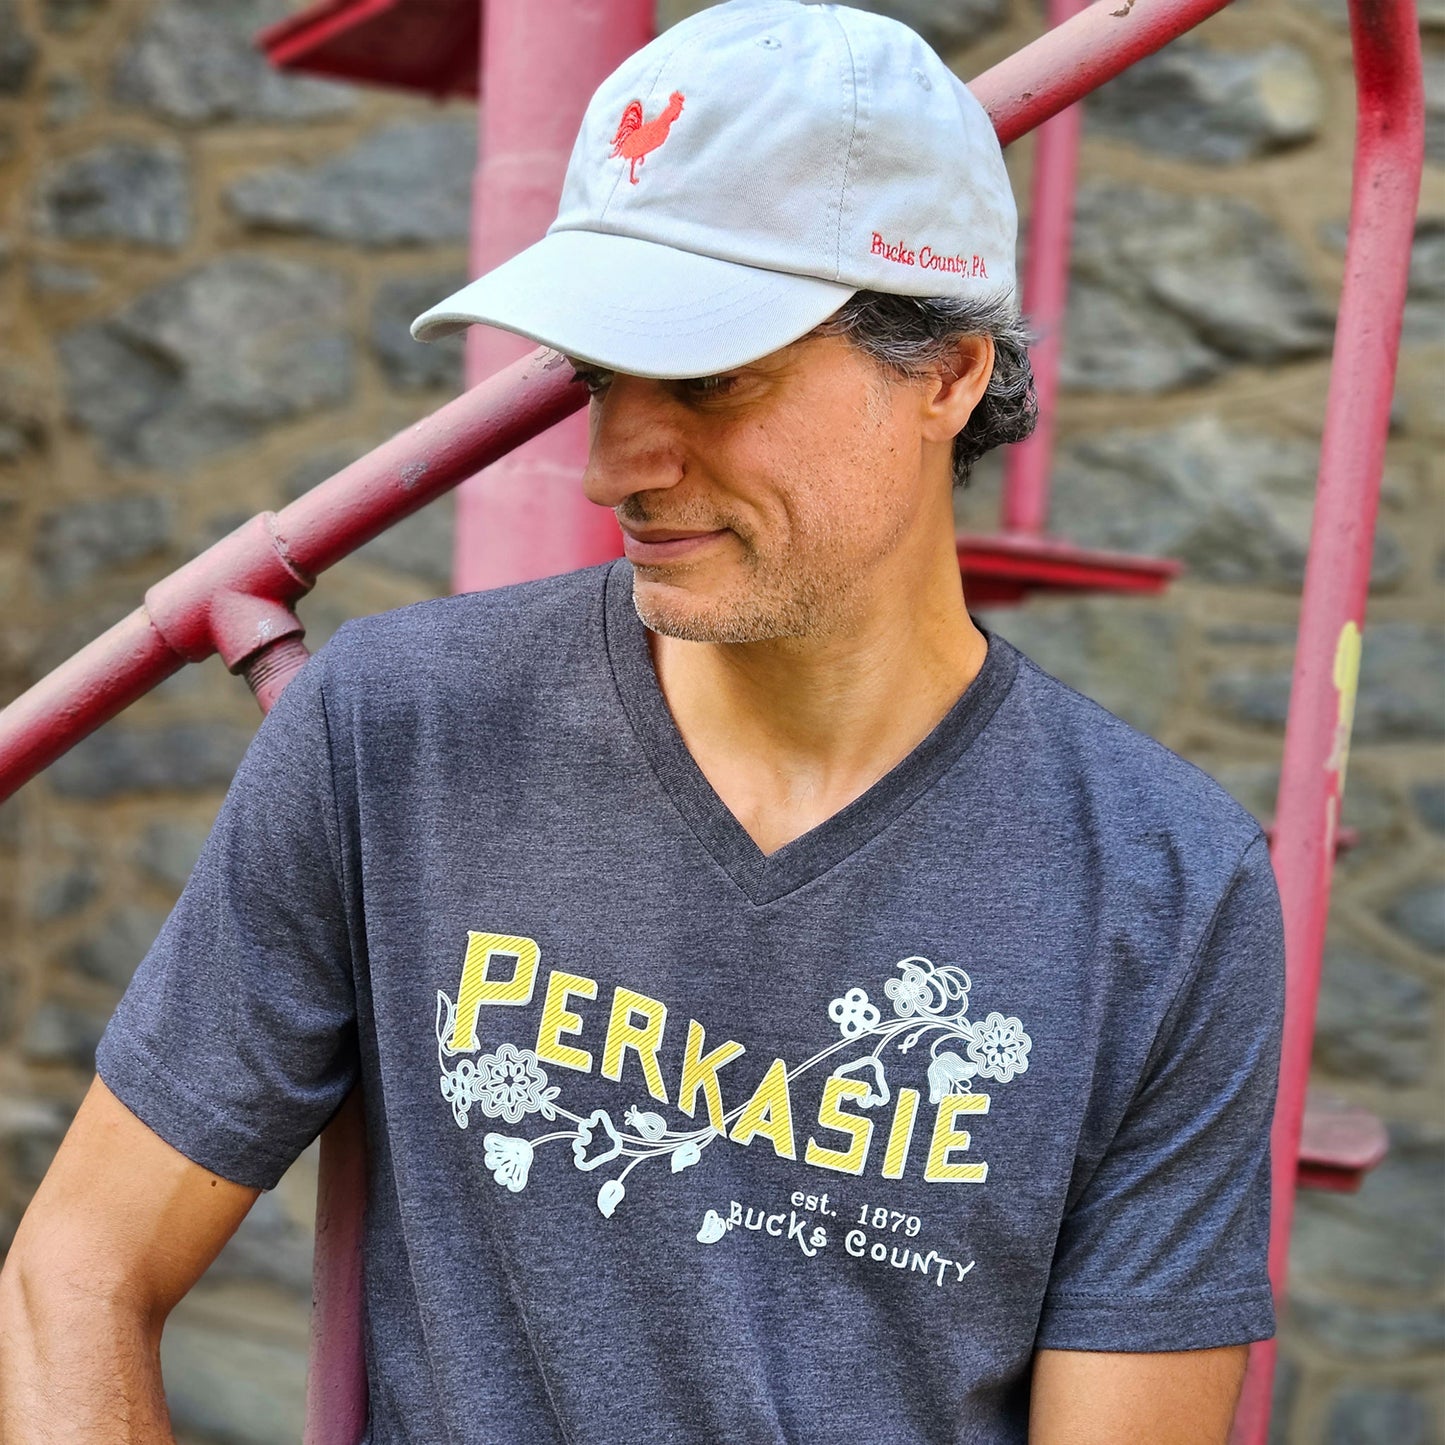 Perkasie/Lenape floral motif graphic V-Neck T-shirt - dark heather grey